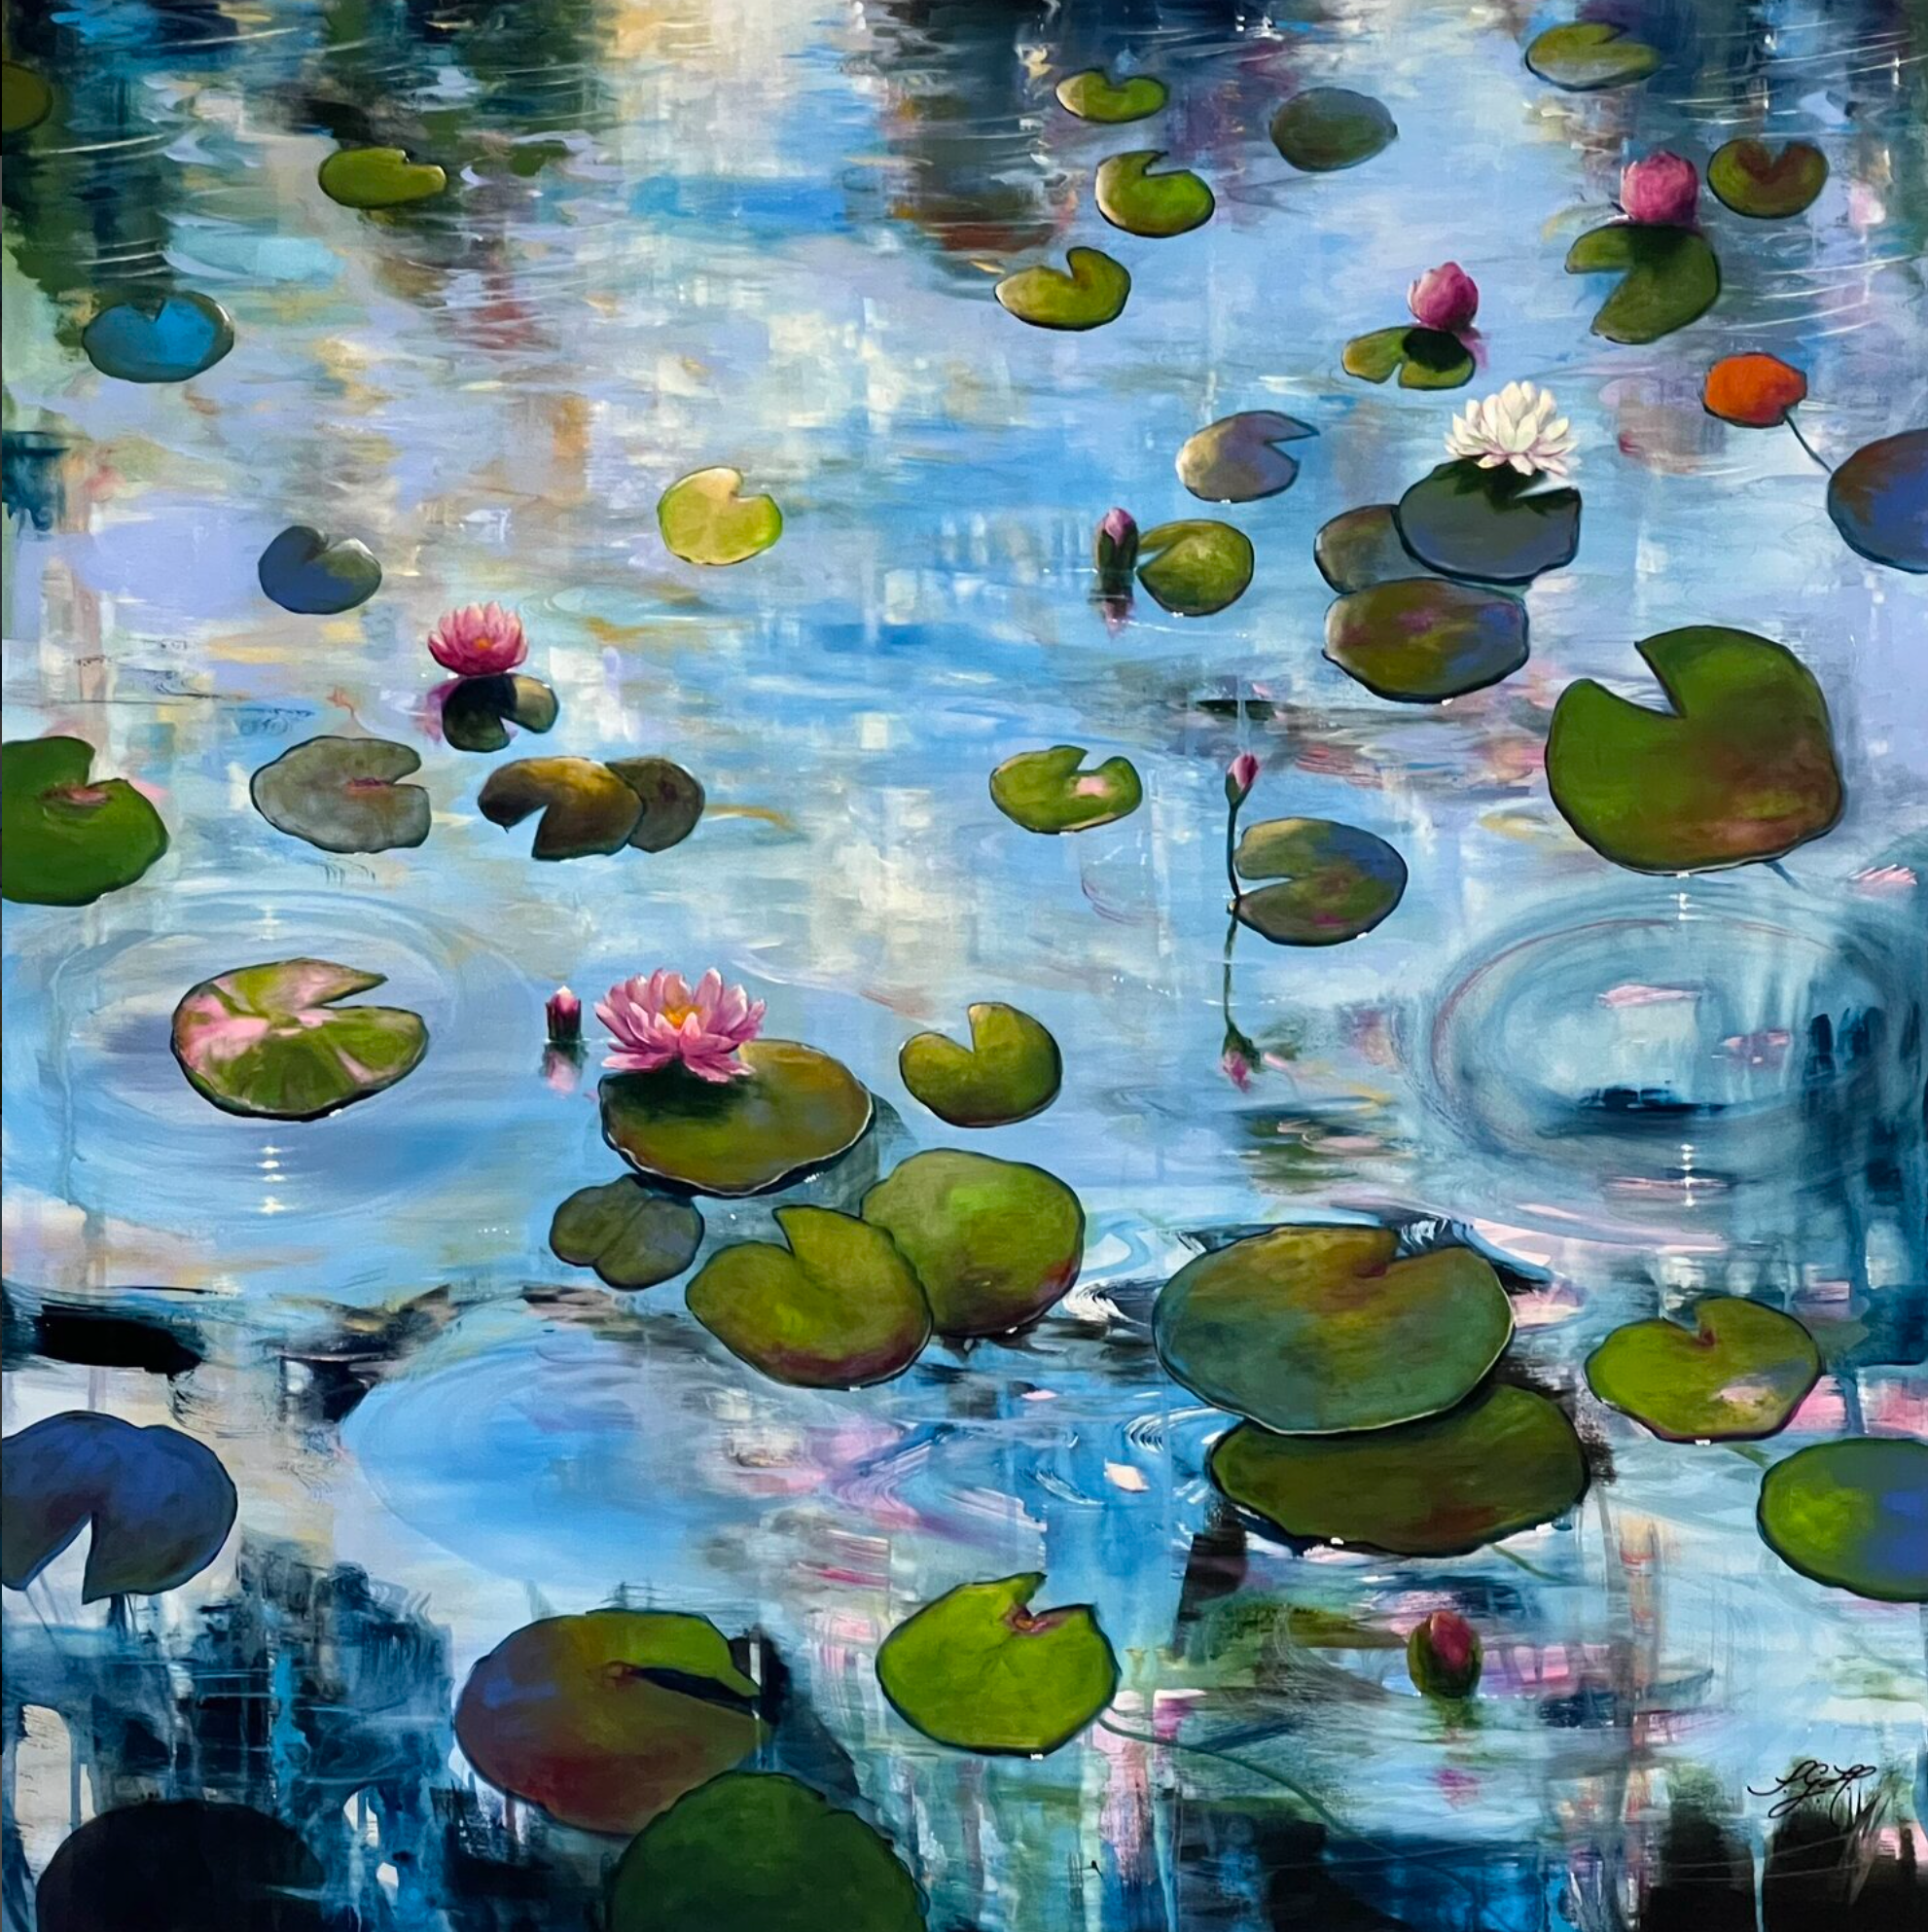 Sandra Gebhardt-Hoepfner的 "永远的睡莲4 "彩色画作展示了睡莲在阳光下漂浮在轻轻移动的水上。光线在水面上平静地反射和舞蹈，在某些地方闪闪发光。